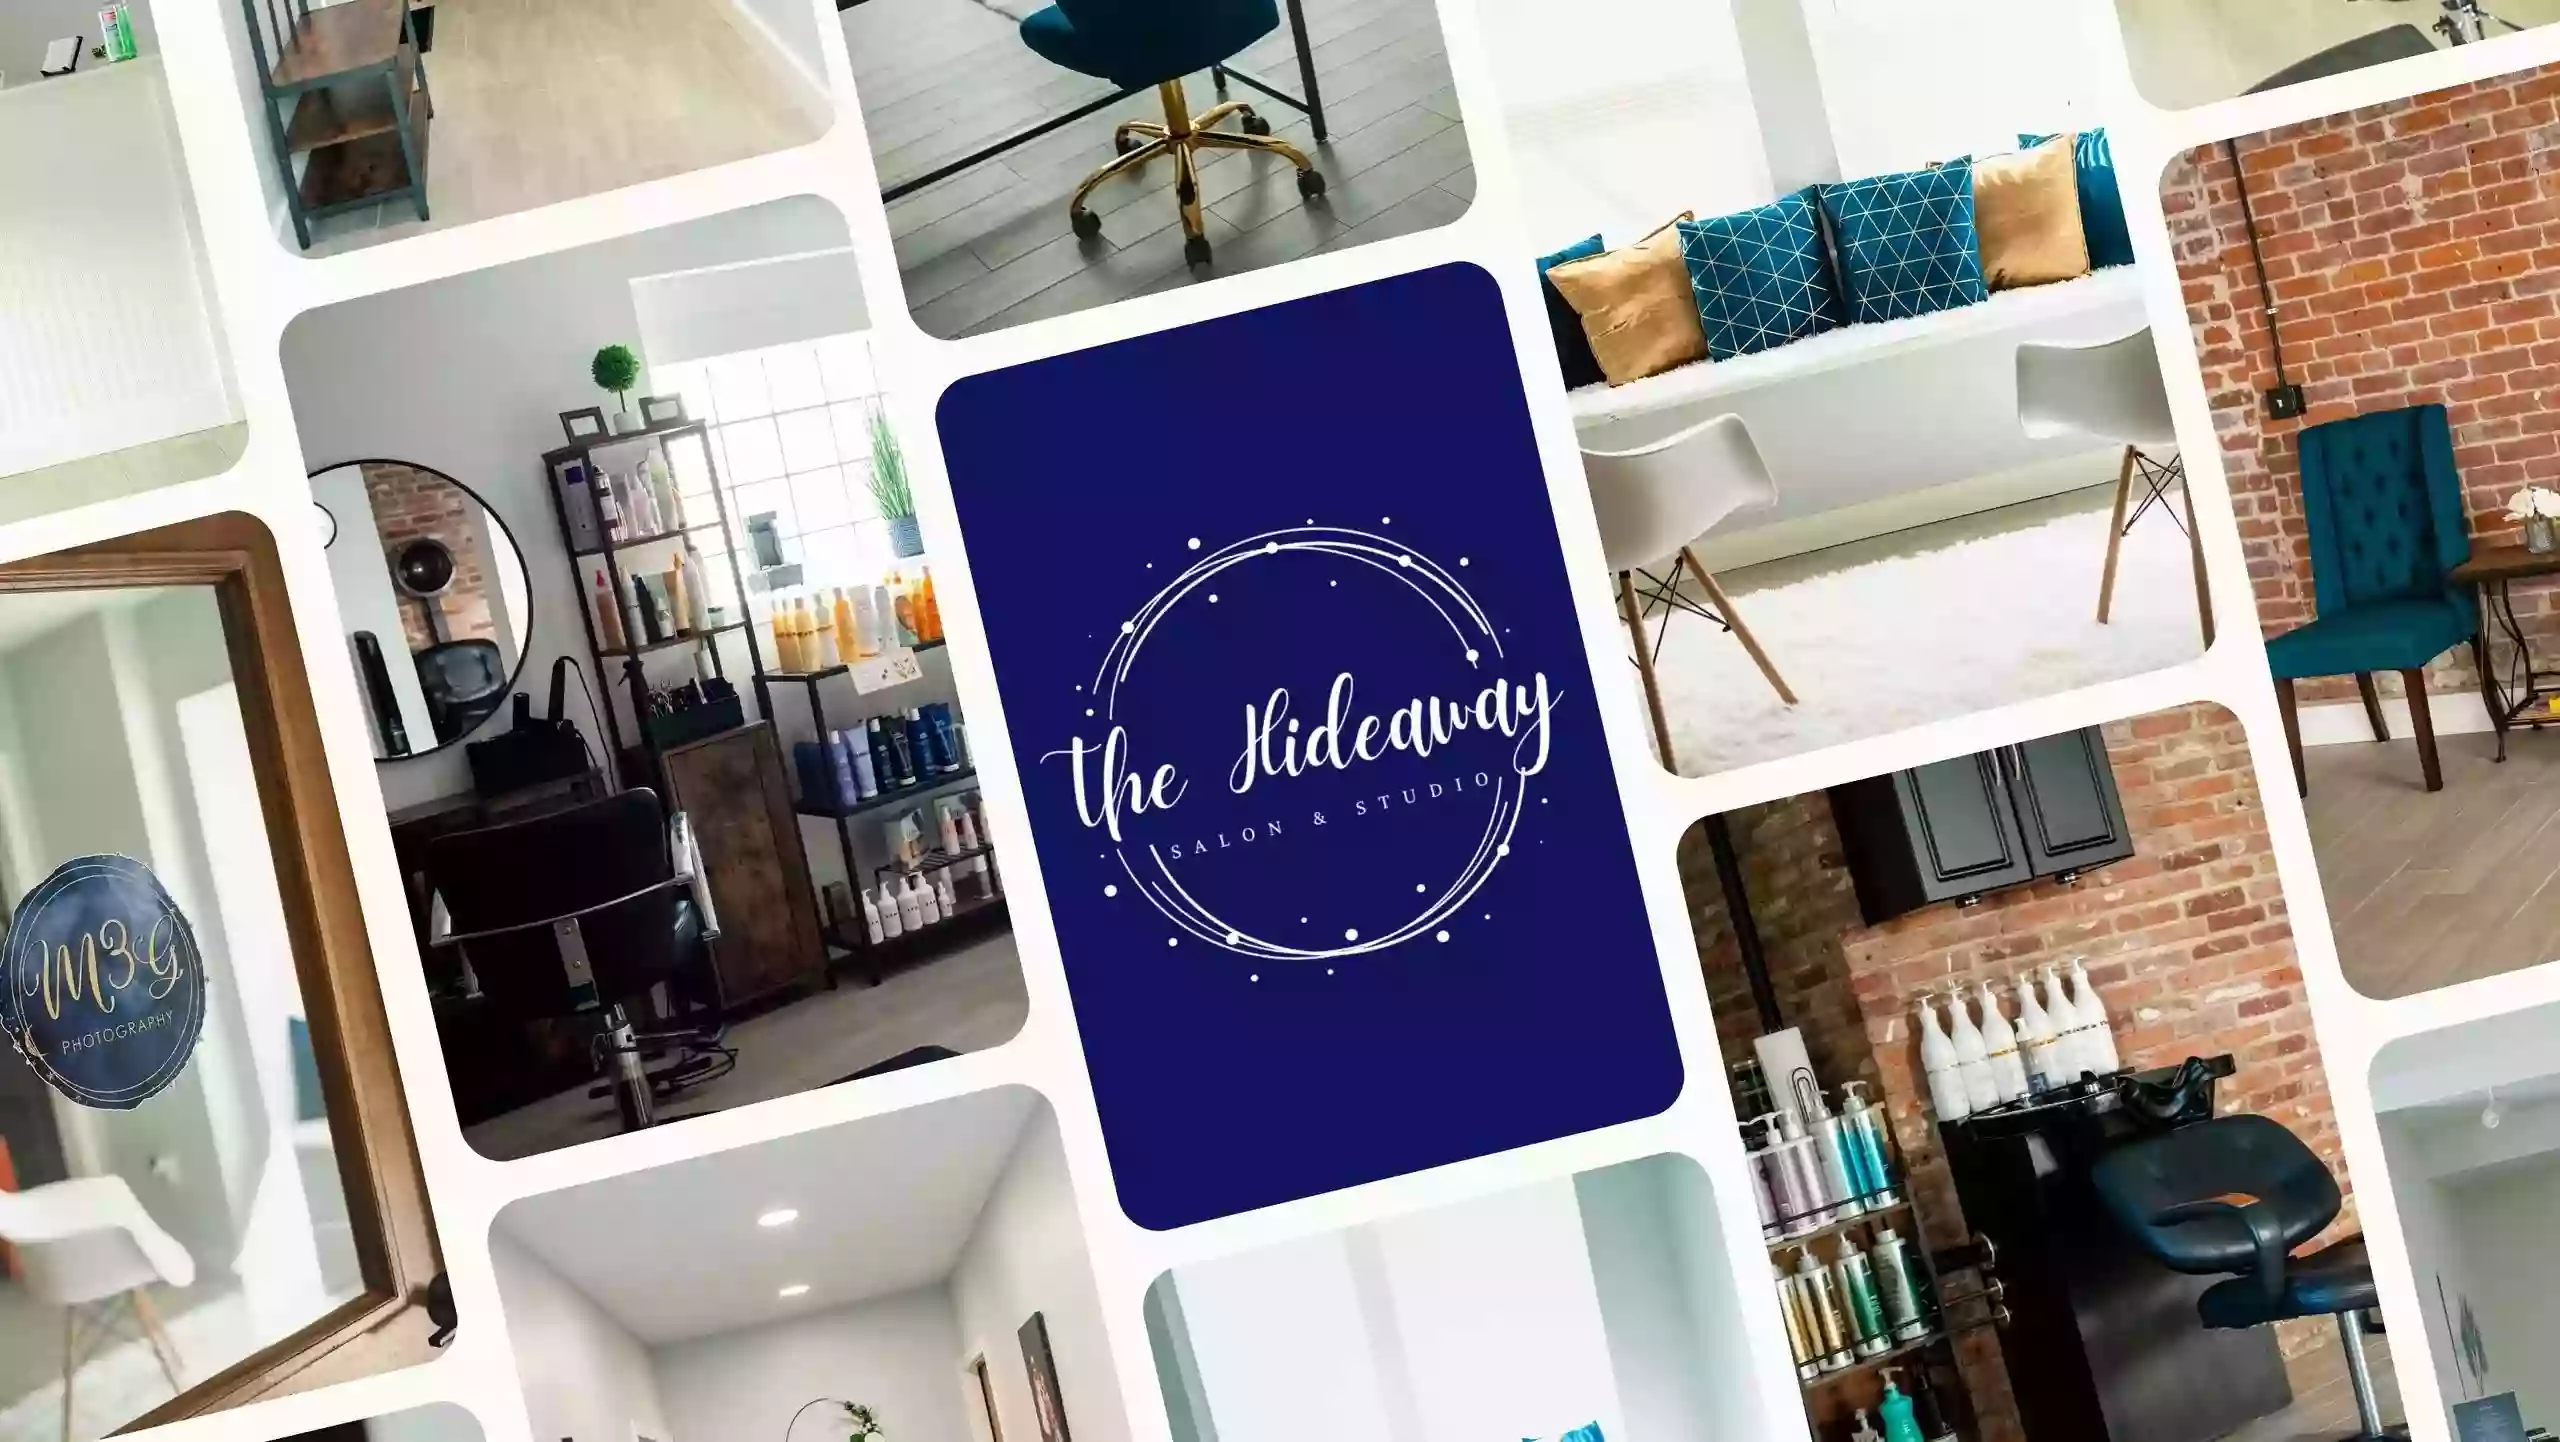 The Hideaway Salon & Studio